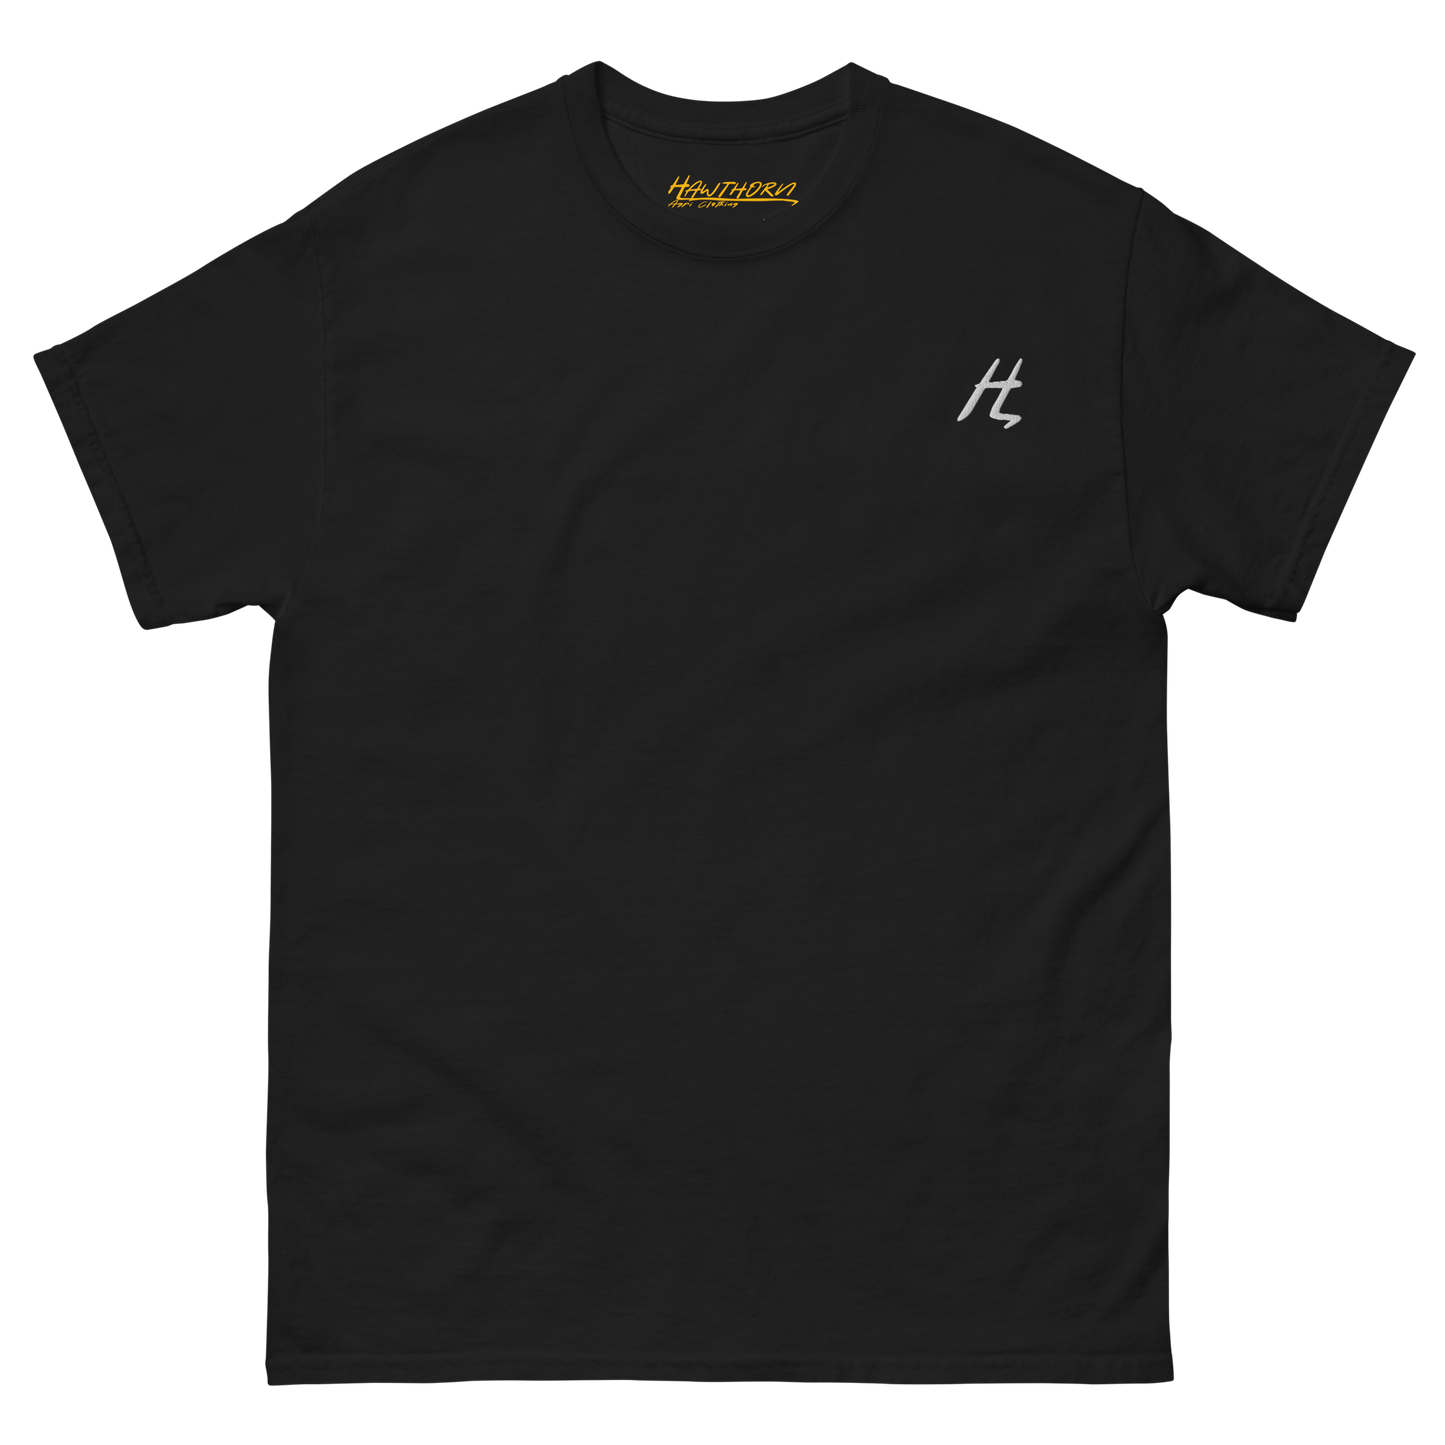 Classic "H" T-shirt